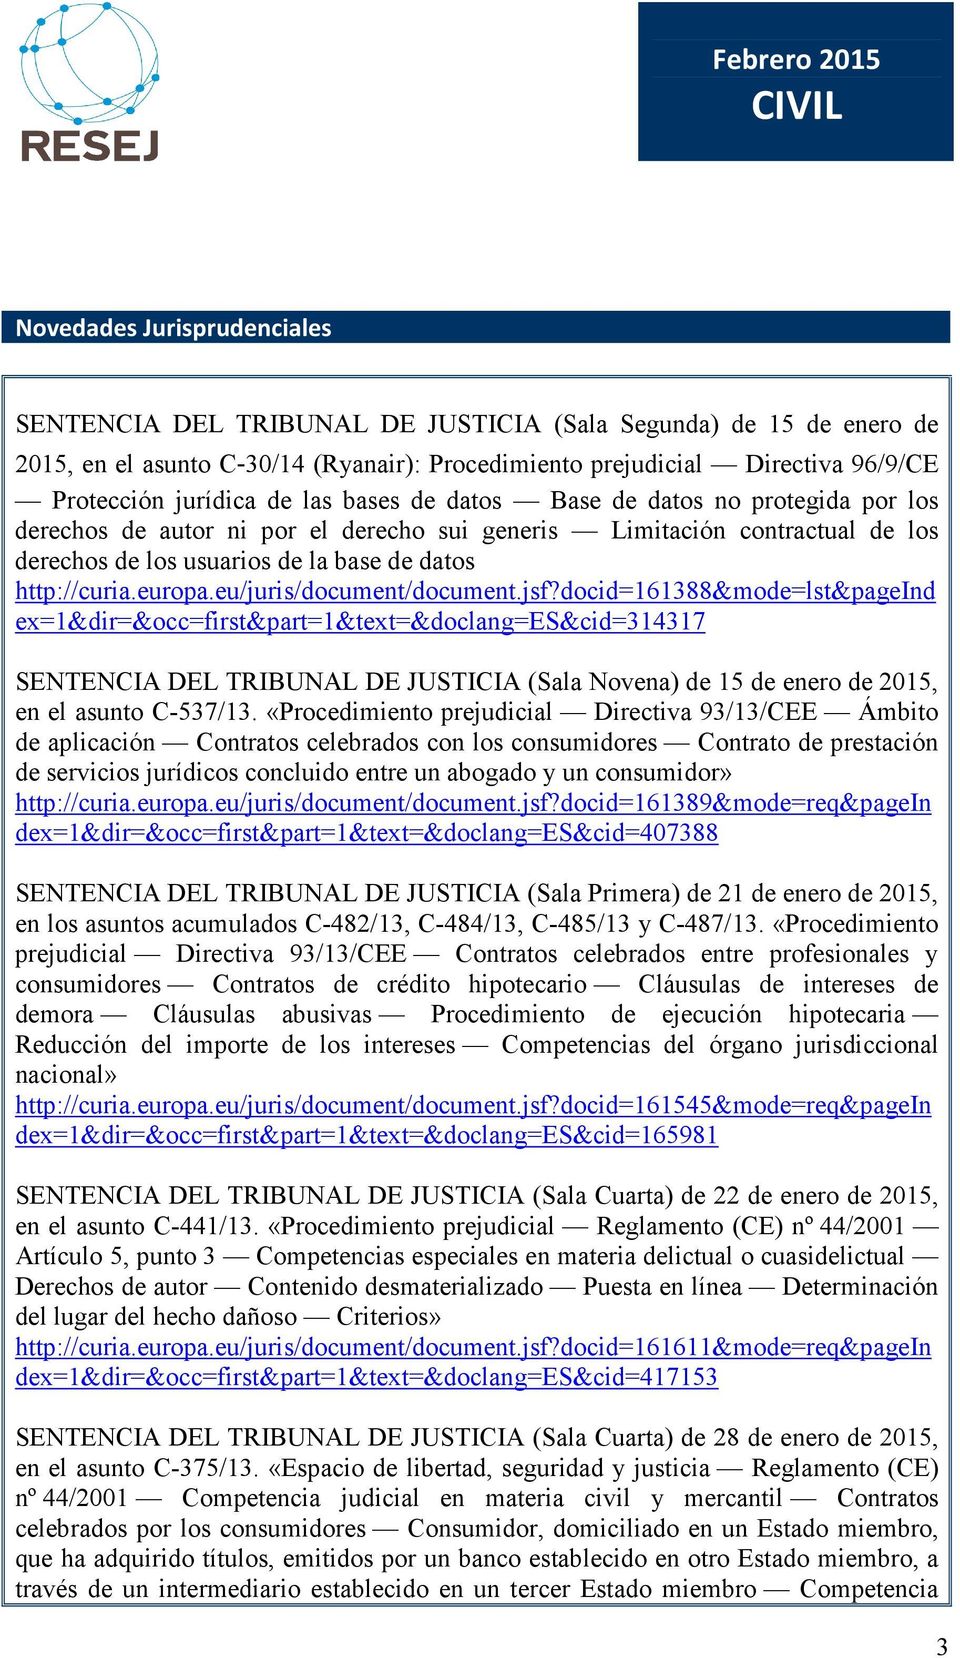 http://curia.europa.eu/juris/document/document.jsf?